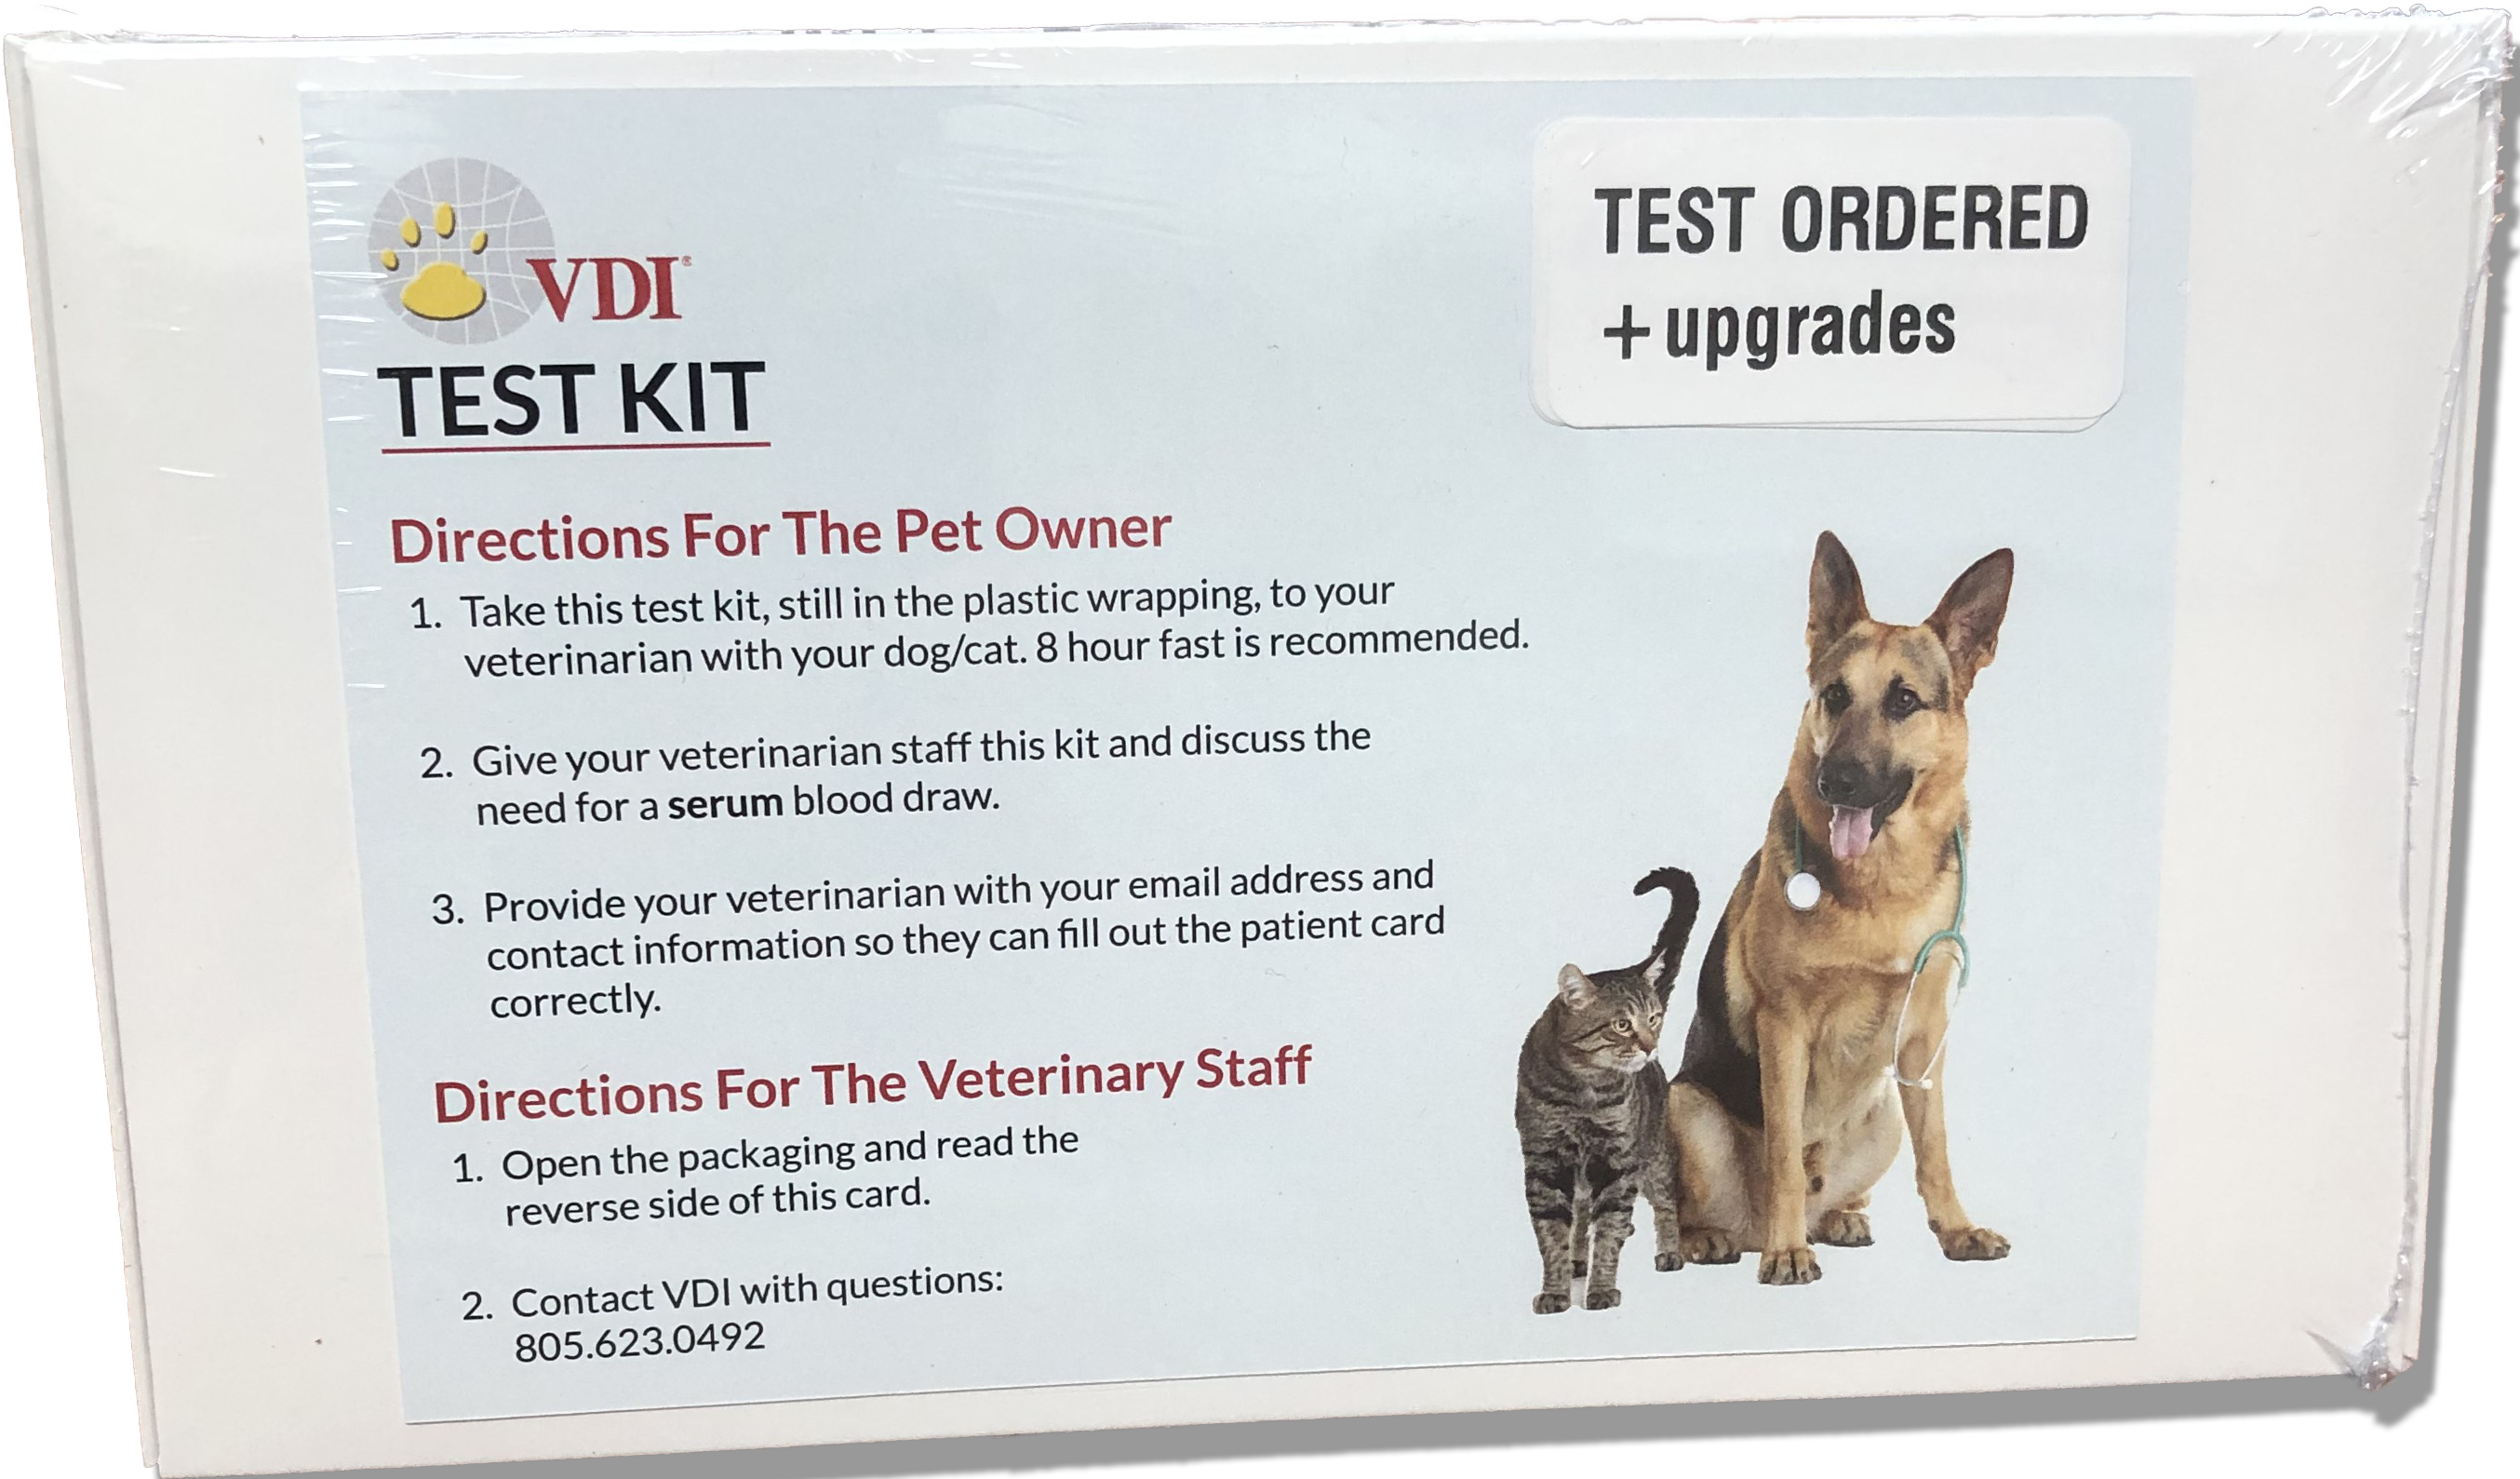 Veterinary Blood Rapid Test Machine